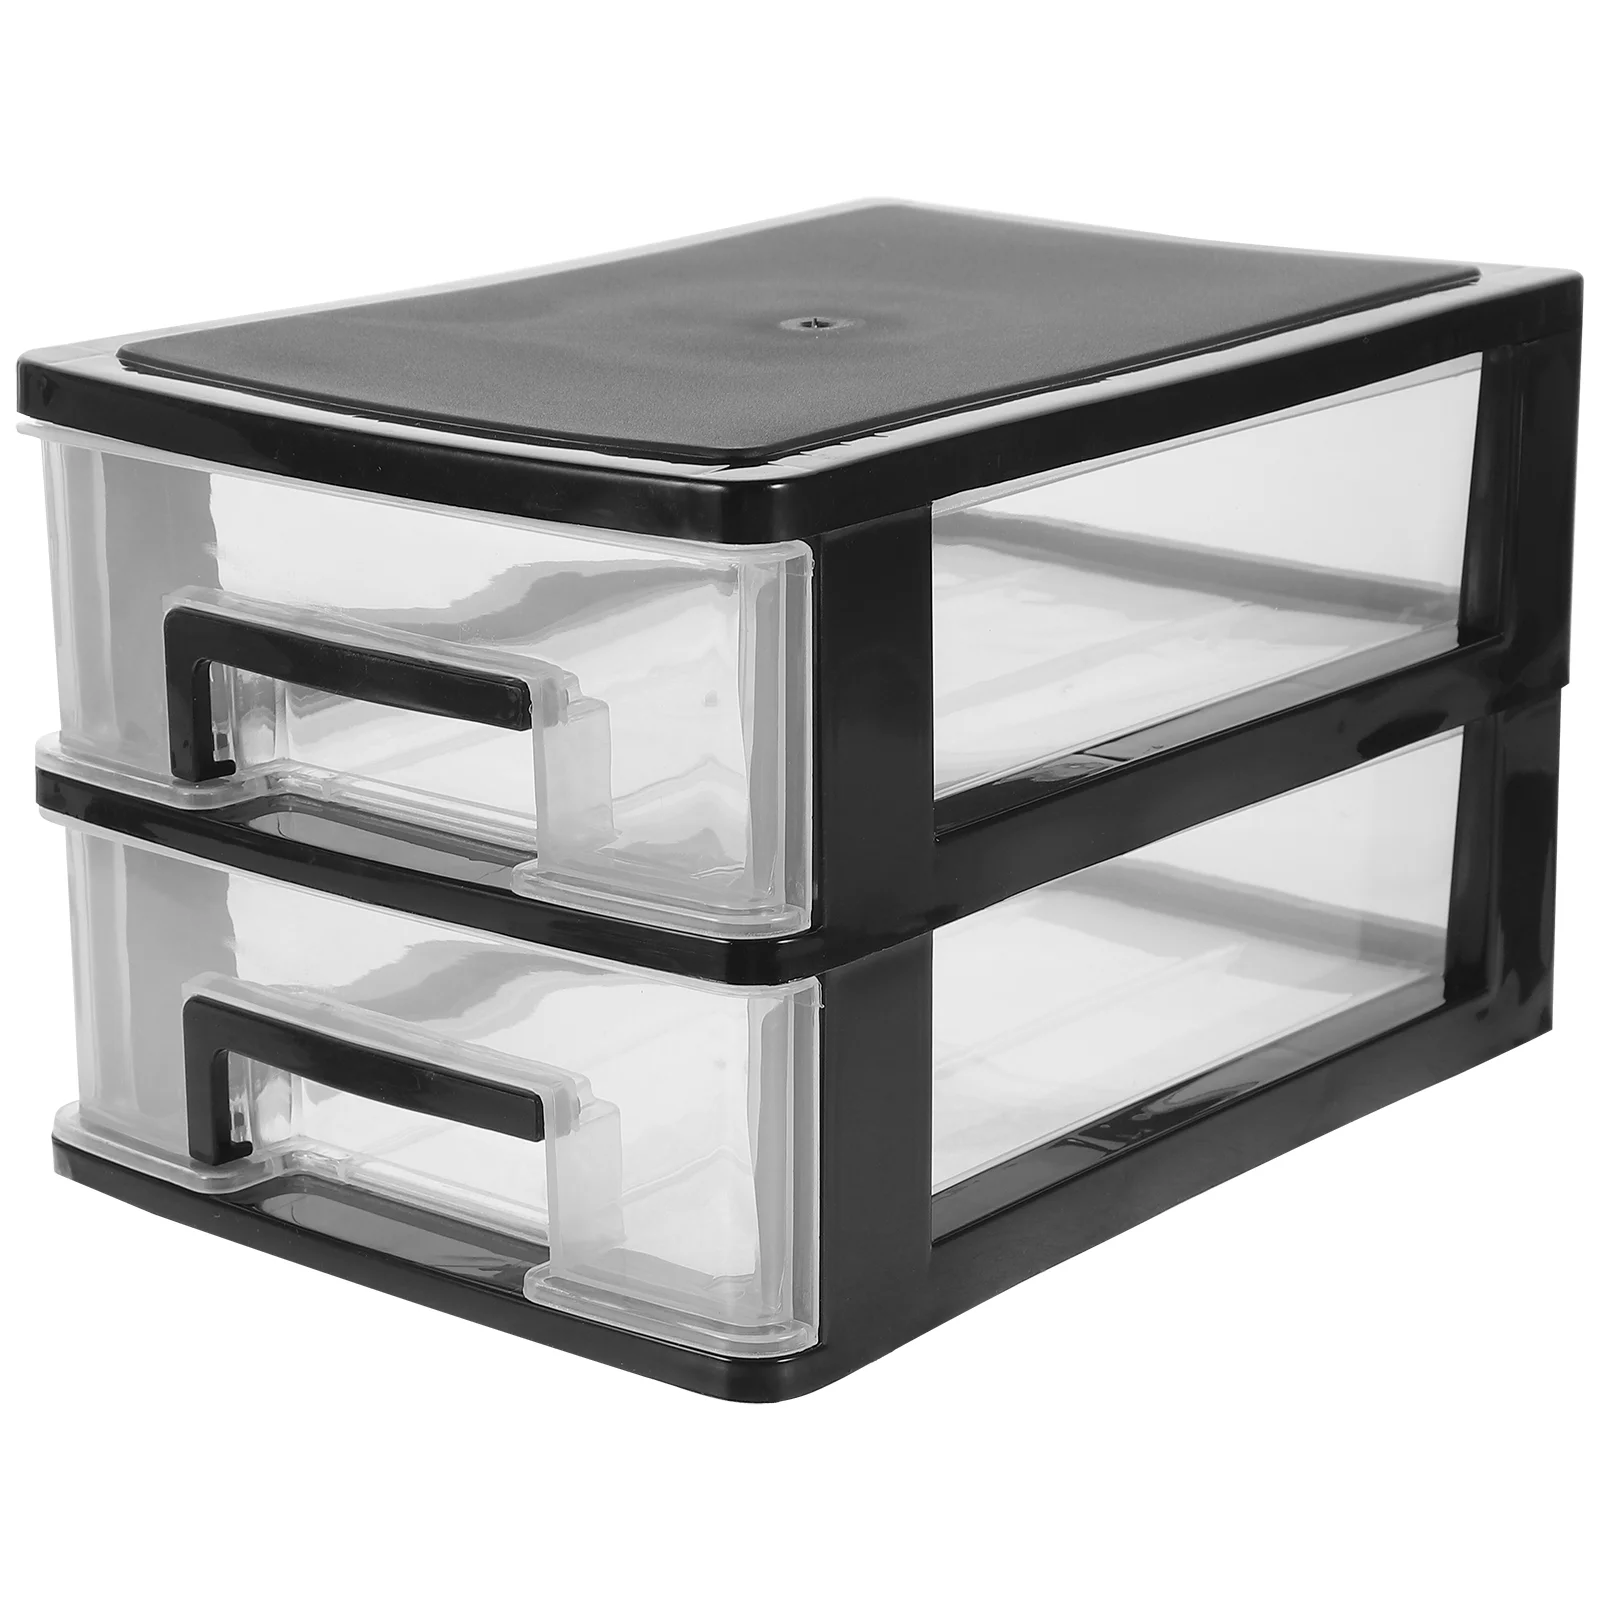 

Storage Drawer Drawers Plastic Organizer Cabinet Box Closet Unit With Type Desktop Shelf Stacking Furniture Bins Chest Layer